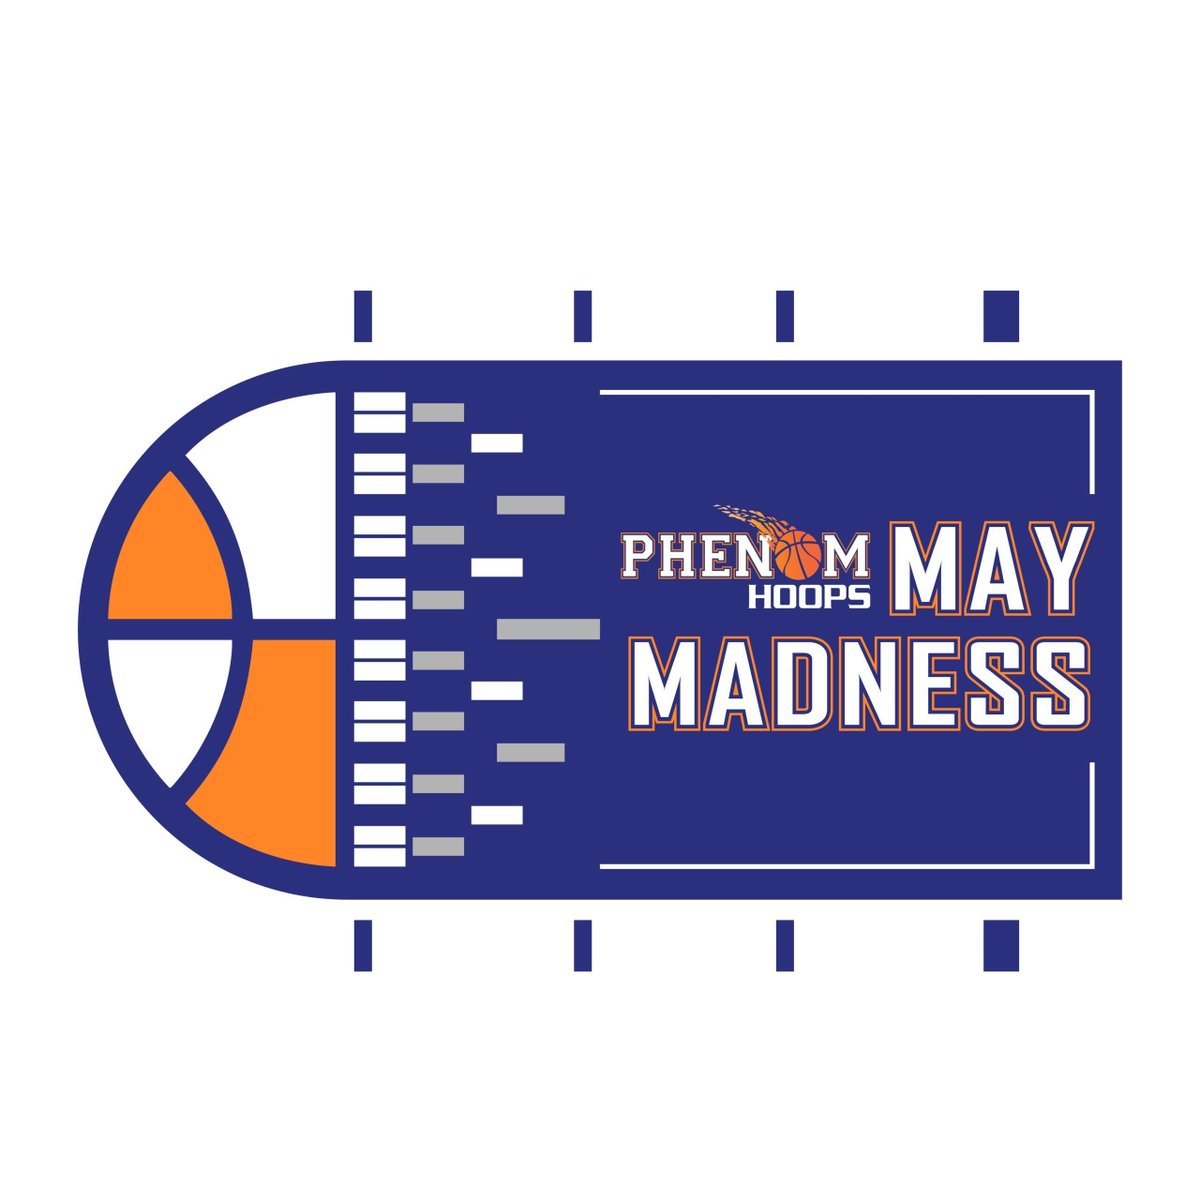 Phenom May Madness May 3-5, 2024 Rise Indoor Sports, Bermuda Run (NC) Address: 419 Twins Way, Bermuda Run, NC 27006 Event Info/ Media/ Tickets/ Schedule: phenomhoopreport.com/phenom-may-mad…